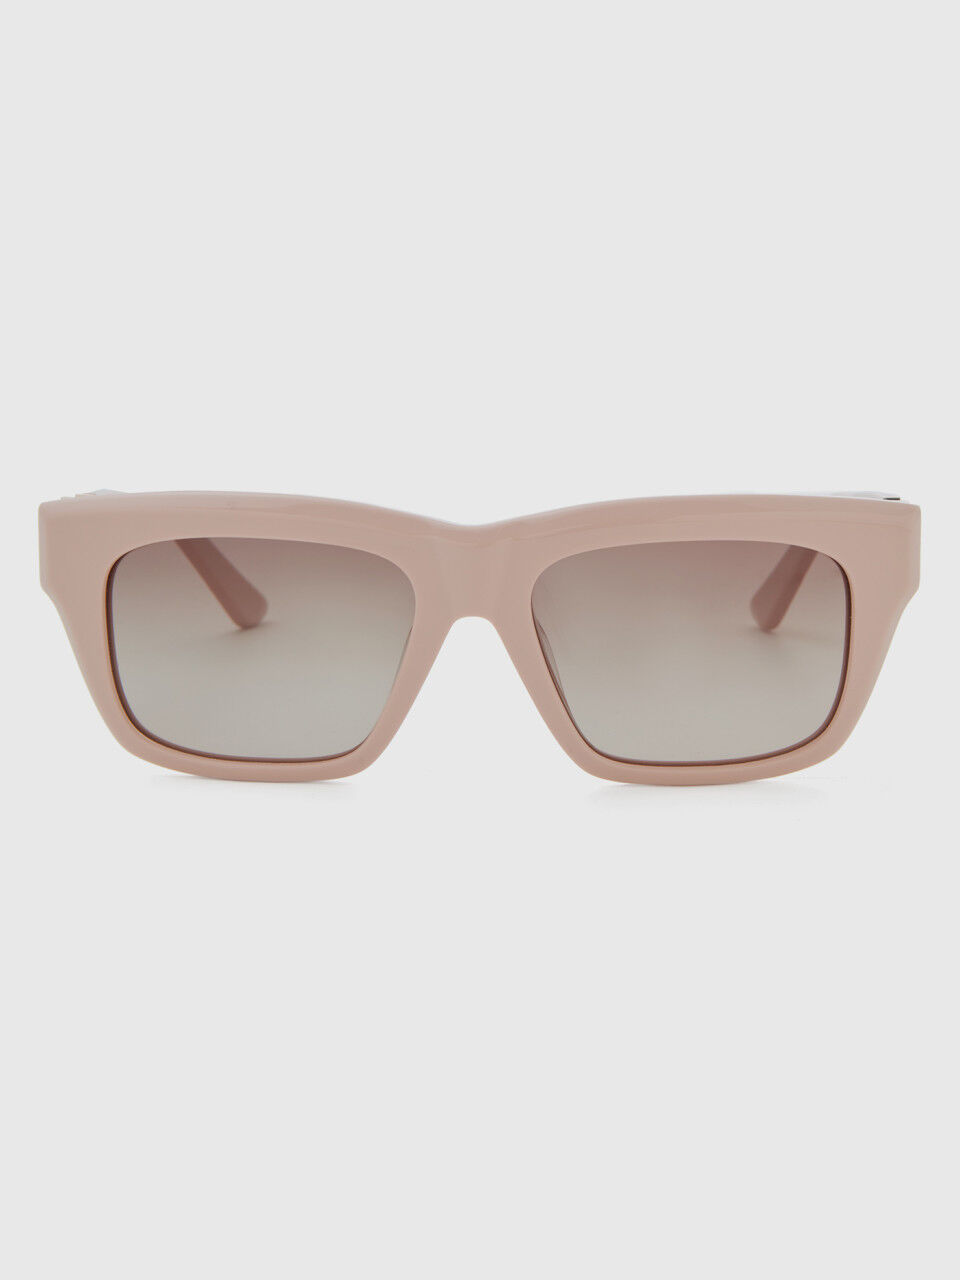 Gafas de sol rectangulares rosa claro